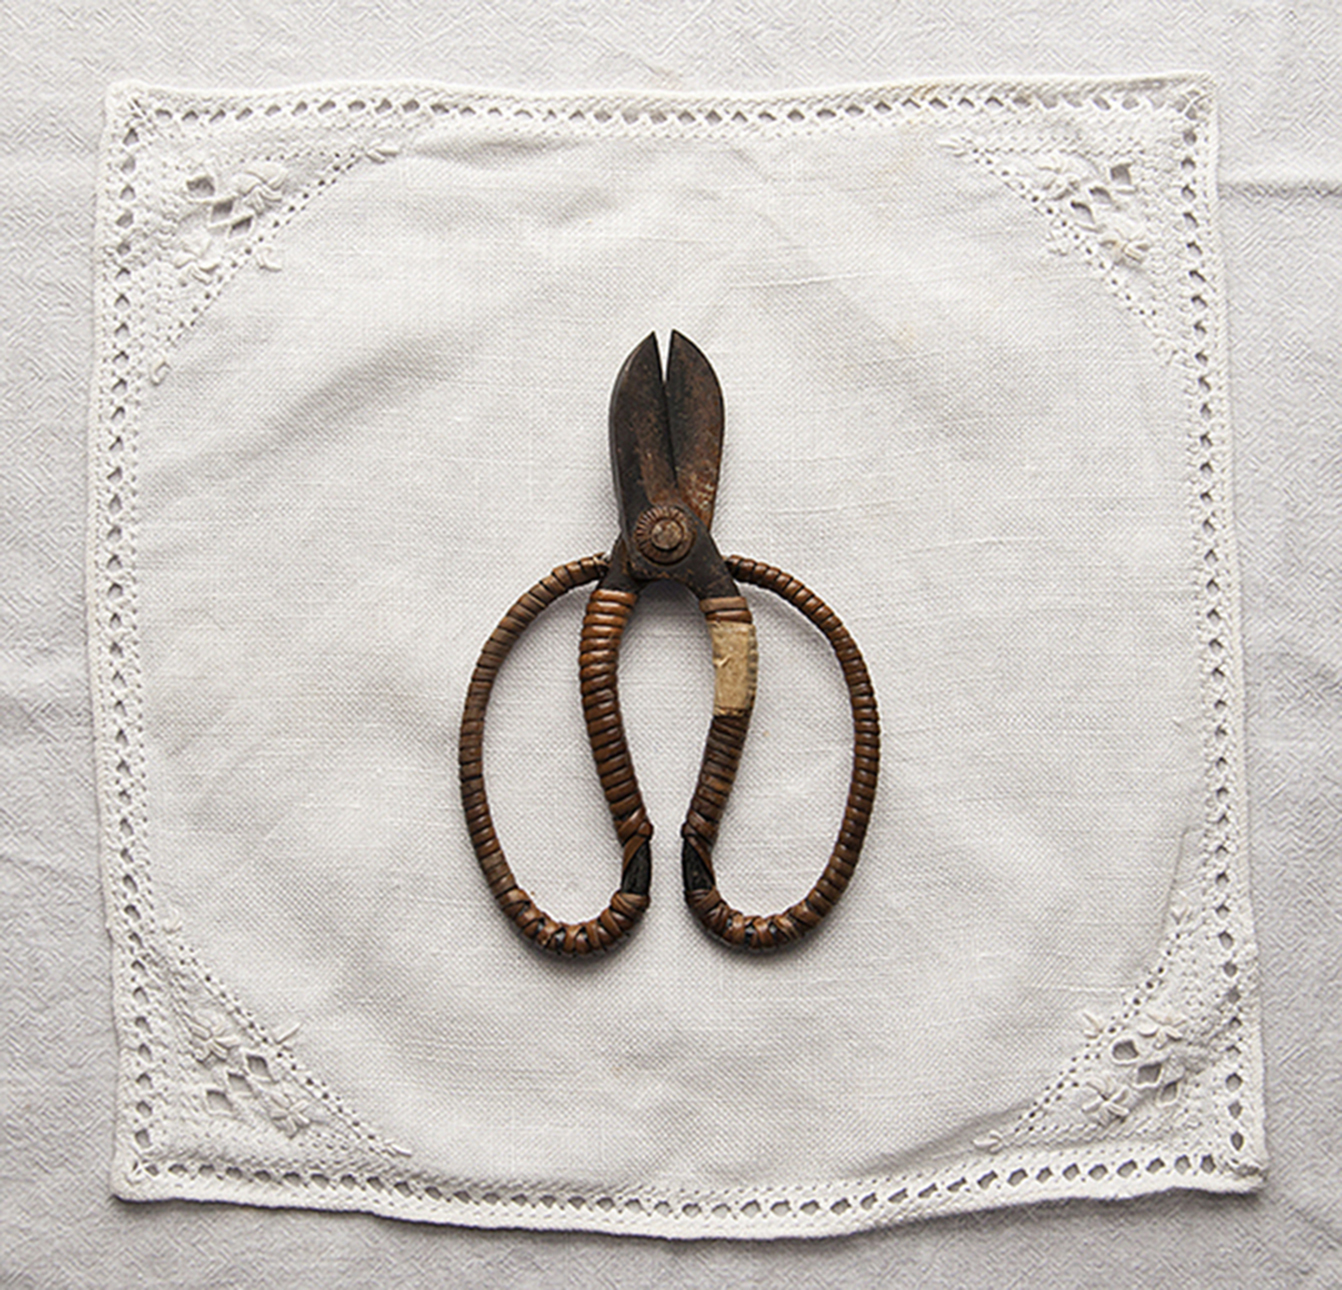 scissors on a doily